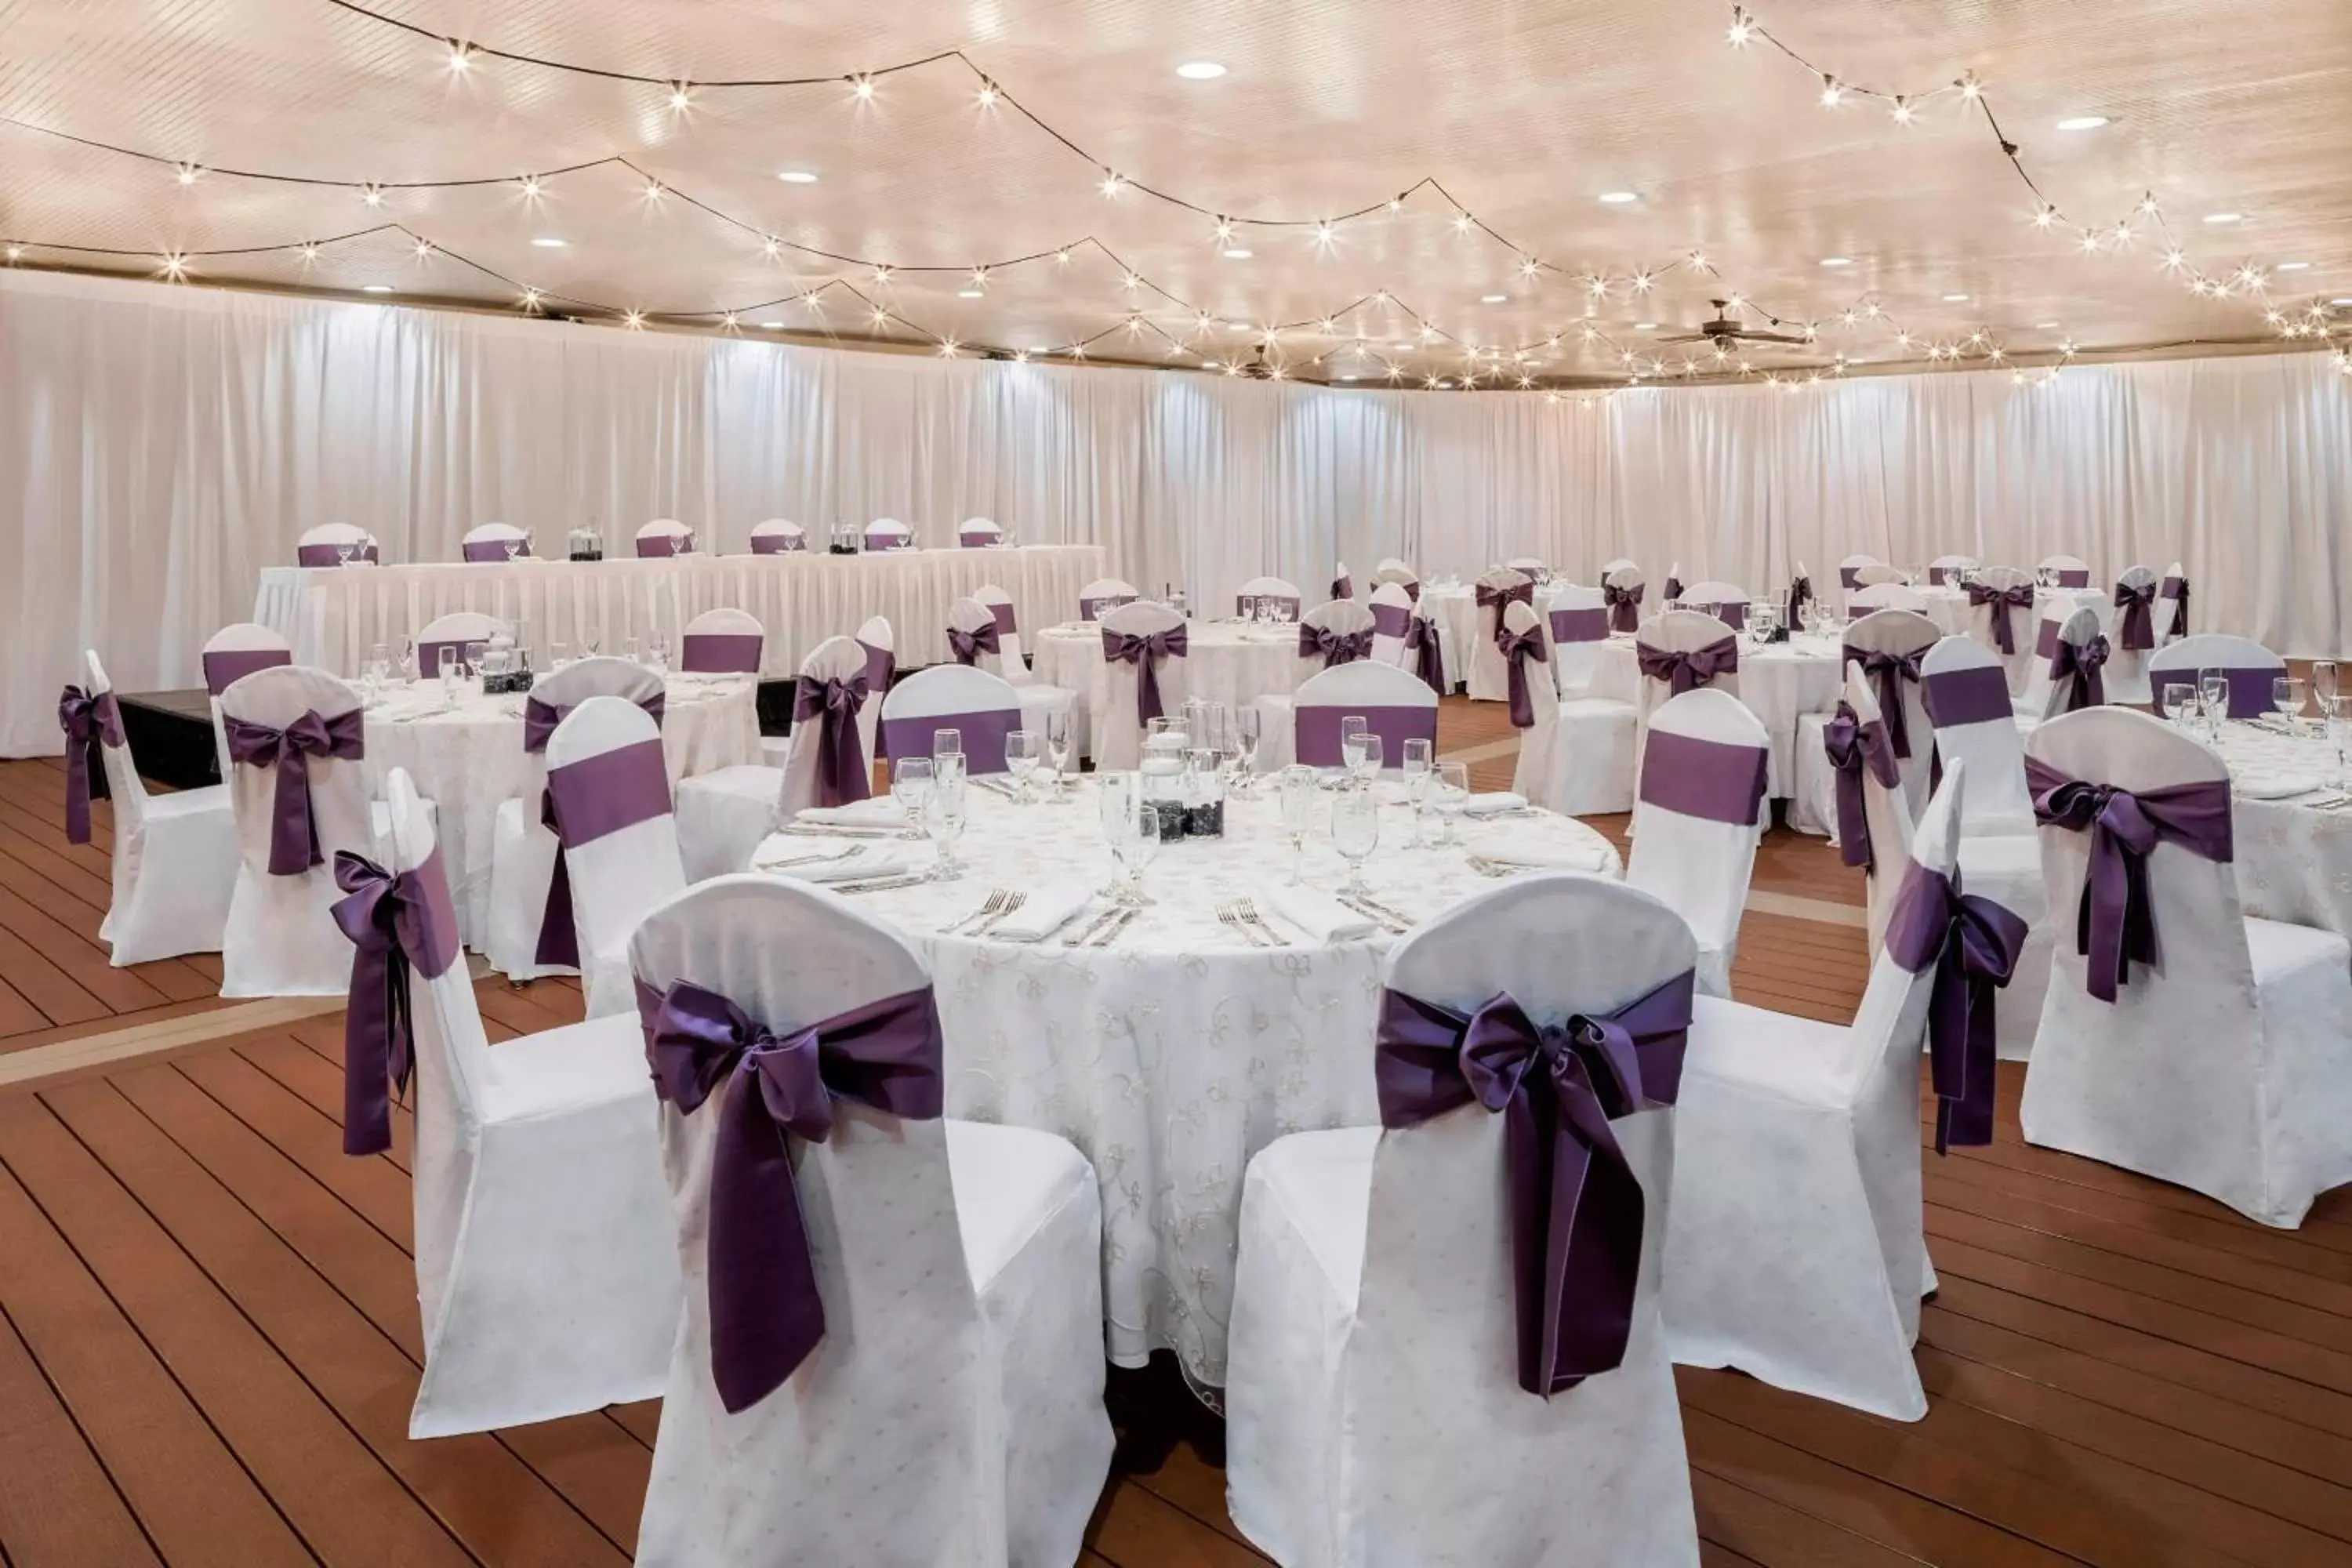 Banquet/Function facilities, Banquet Facilities in Fort Collins Marriott